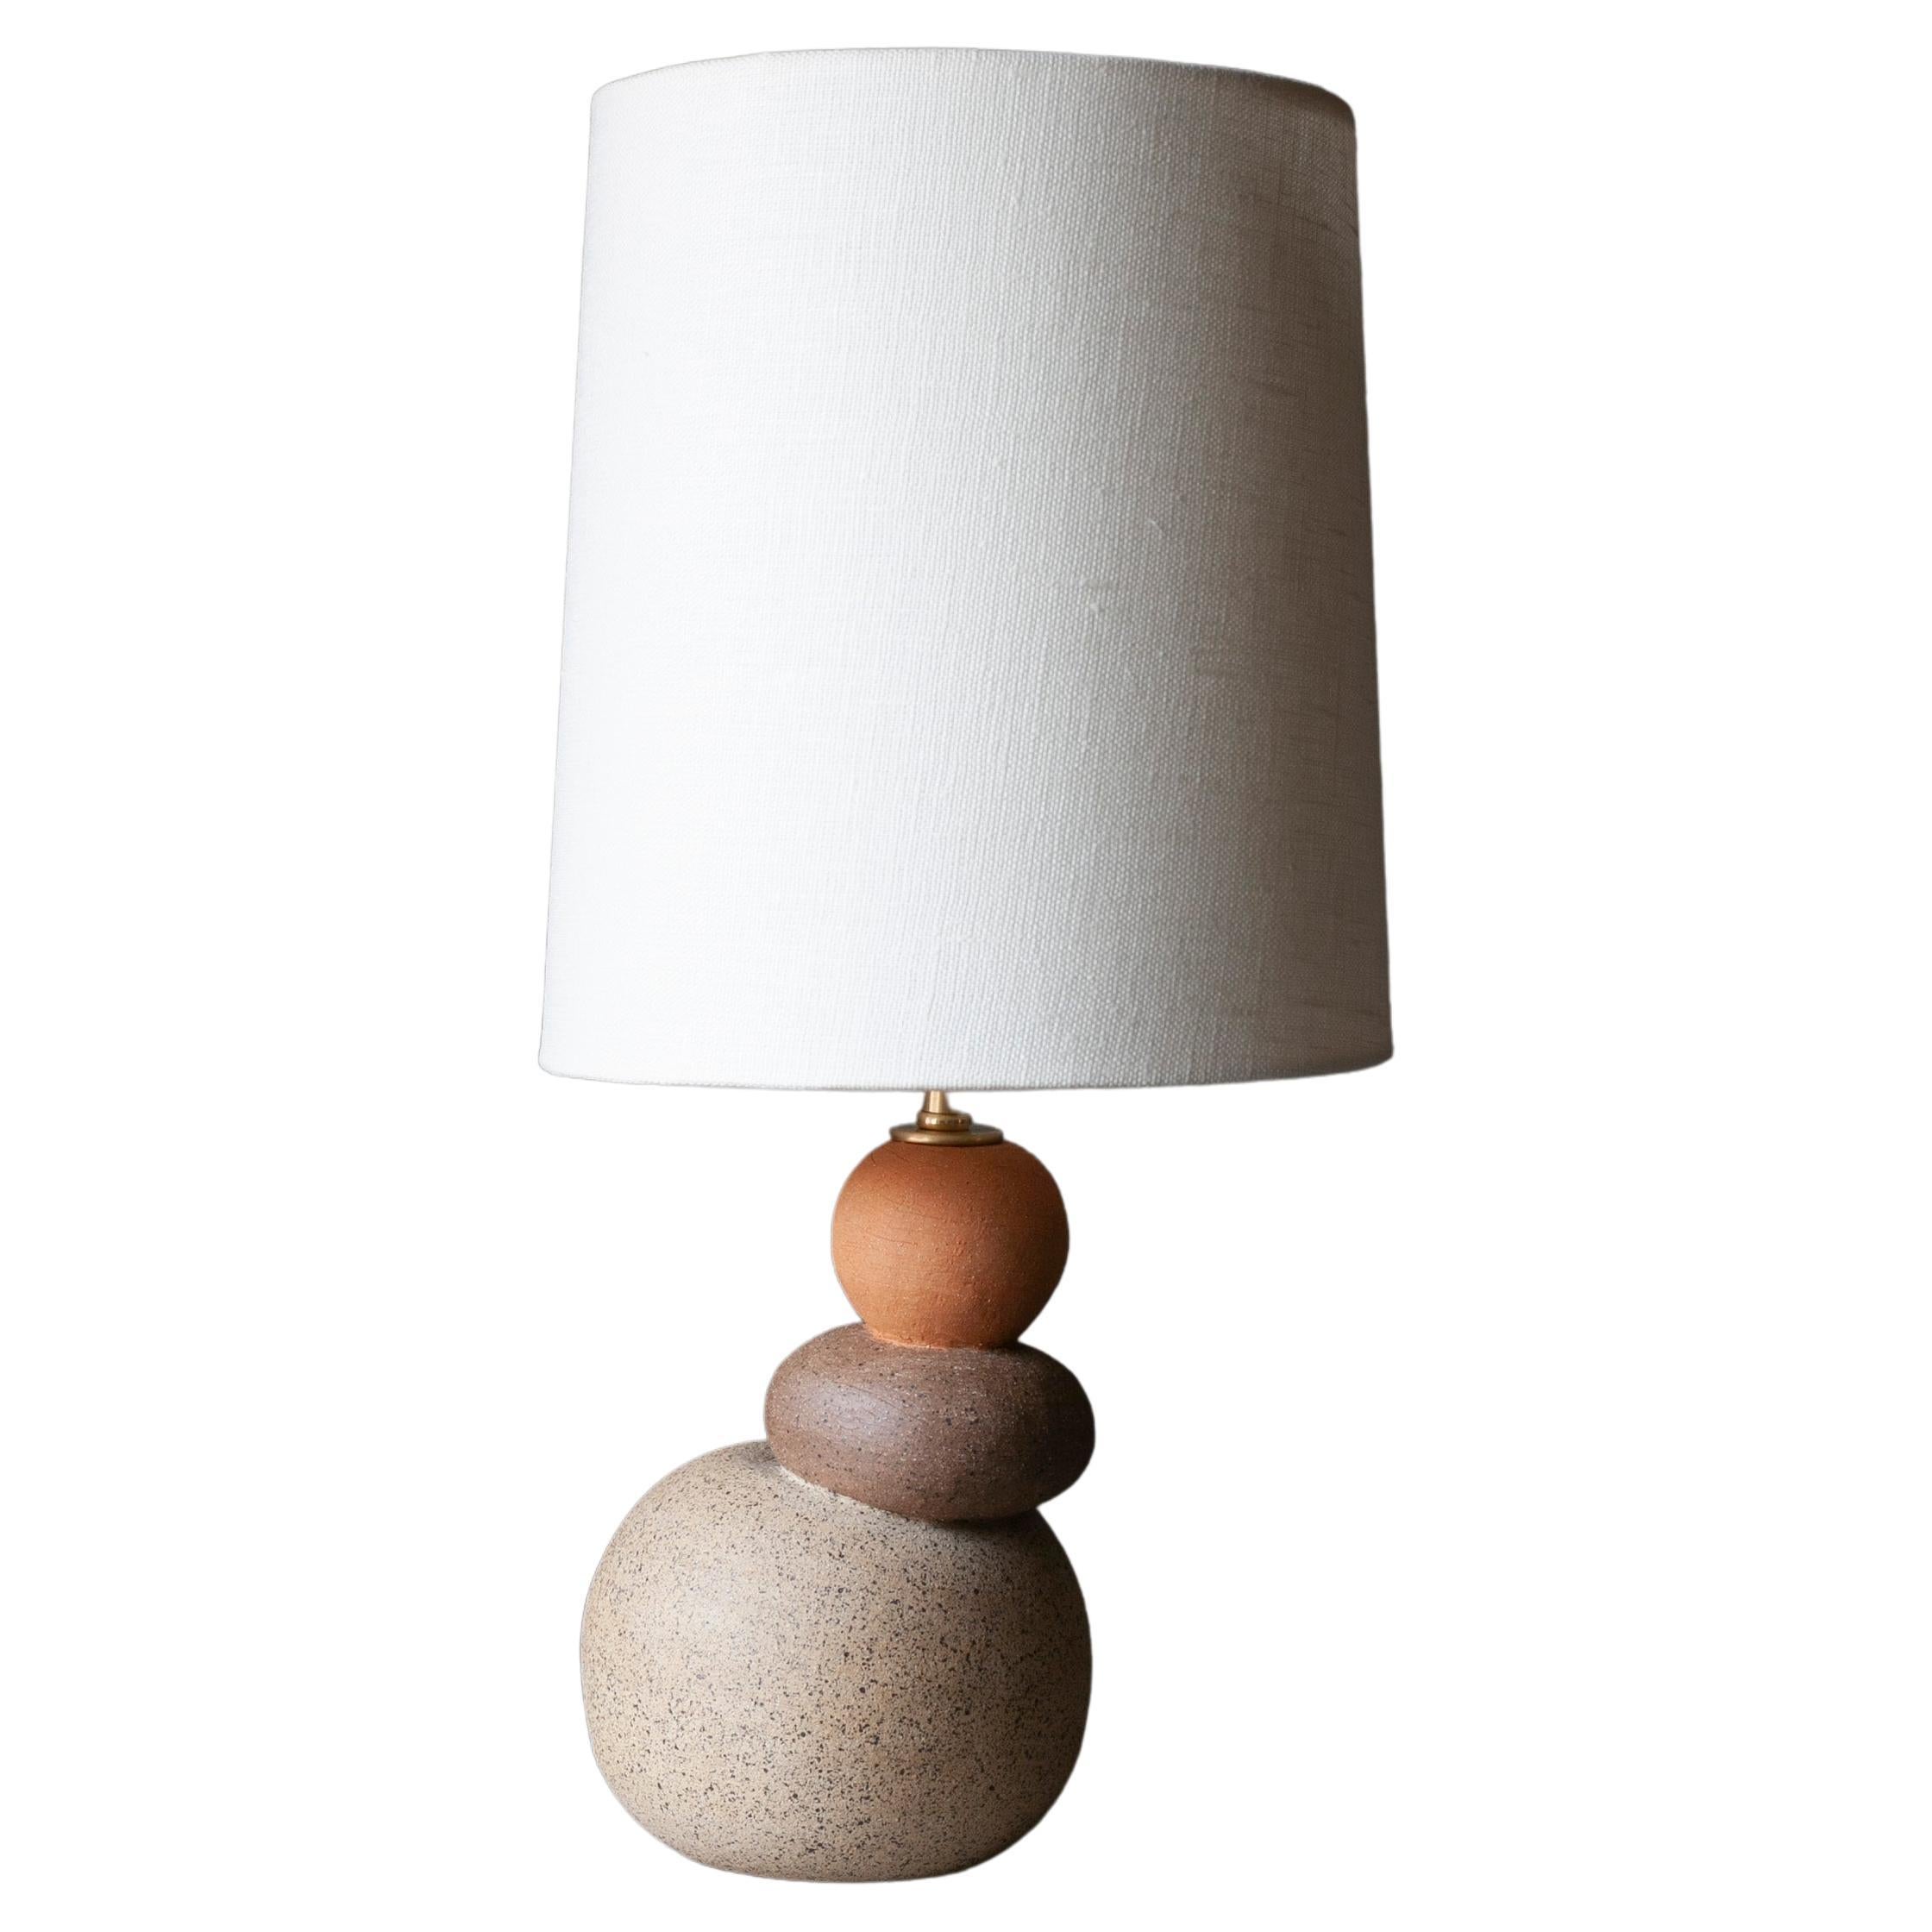 Zeitgenössische handgefertigte Mini Dupont-Lampe aus Keramik